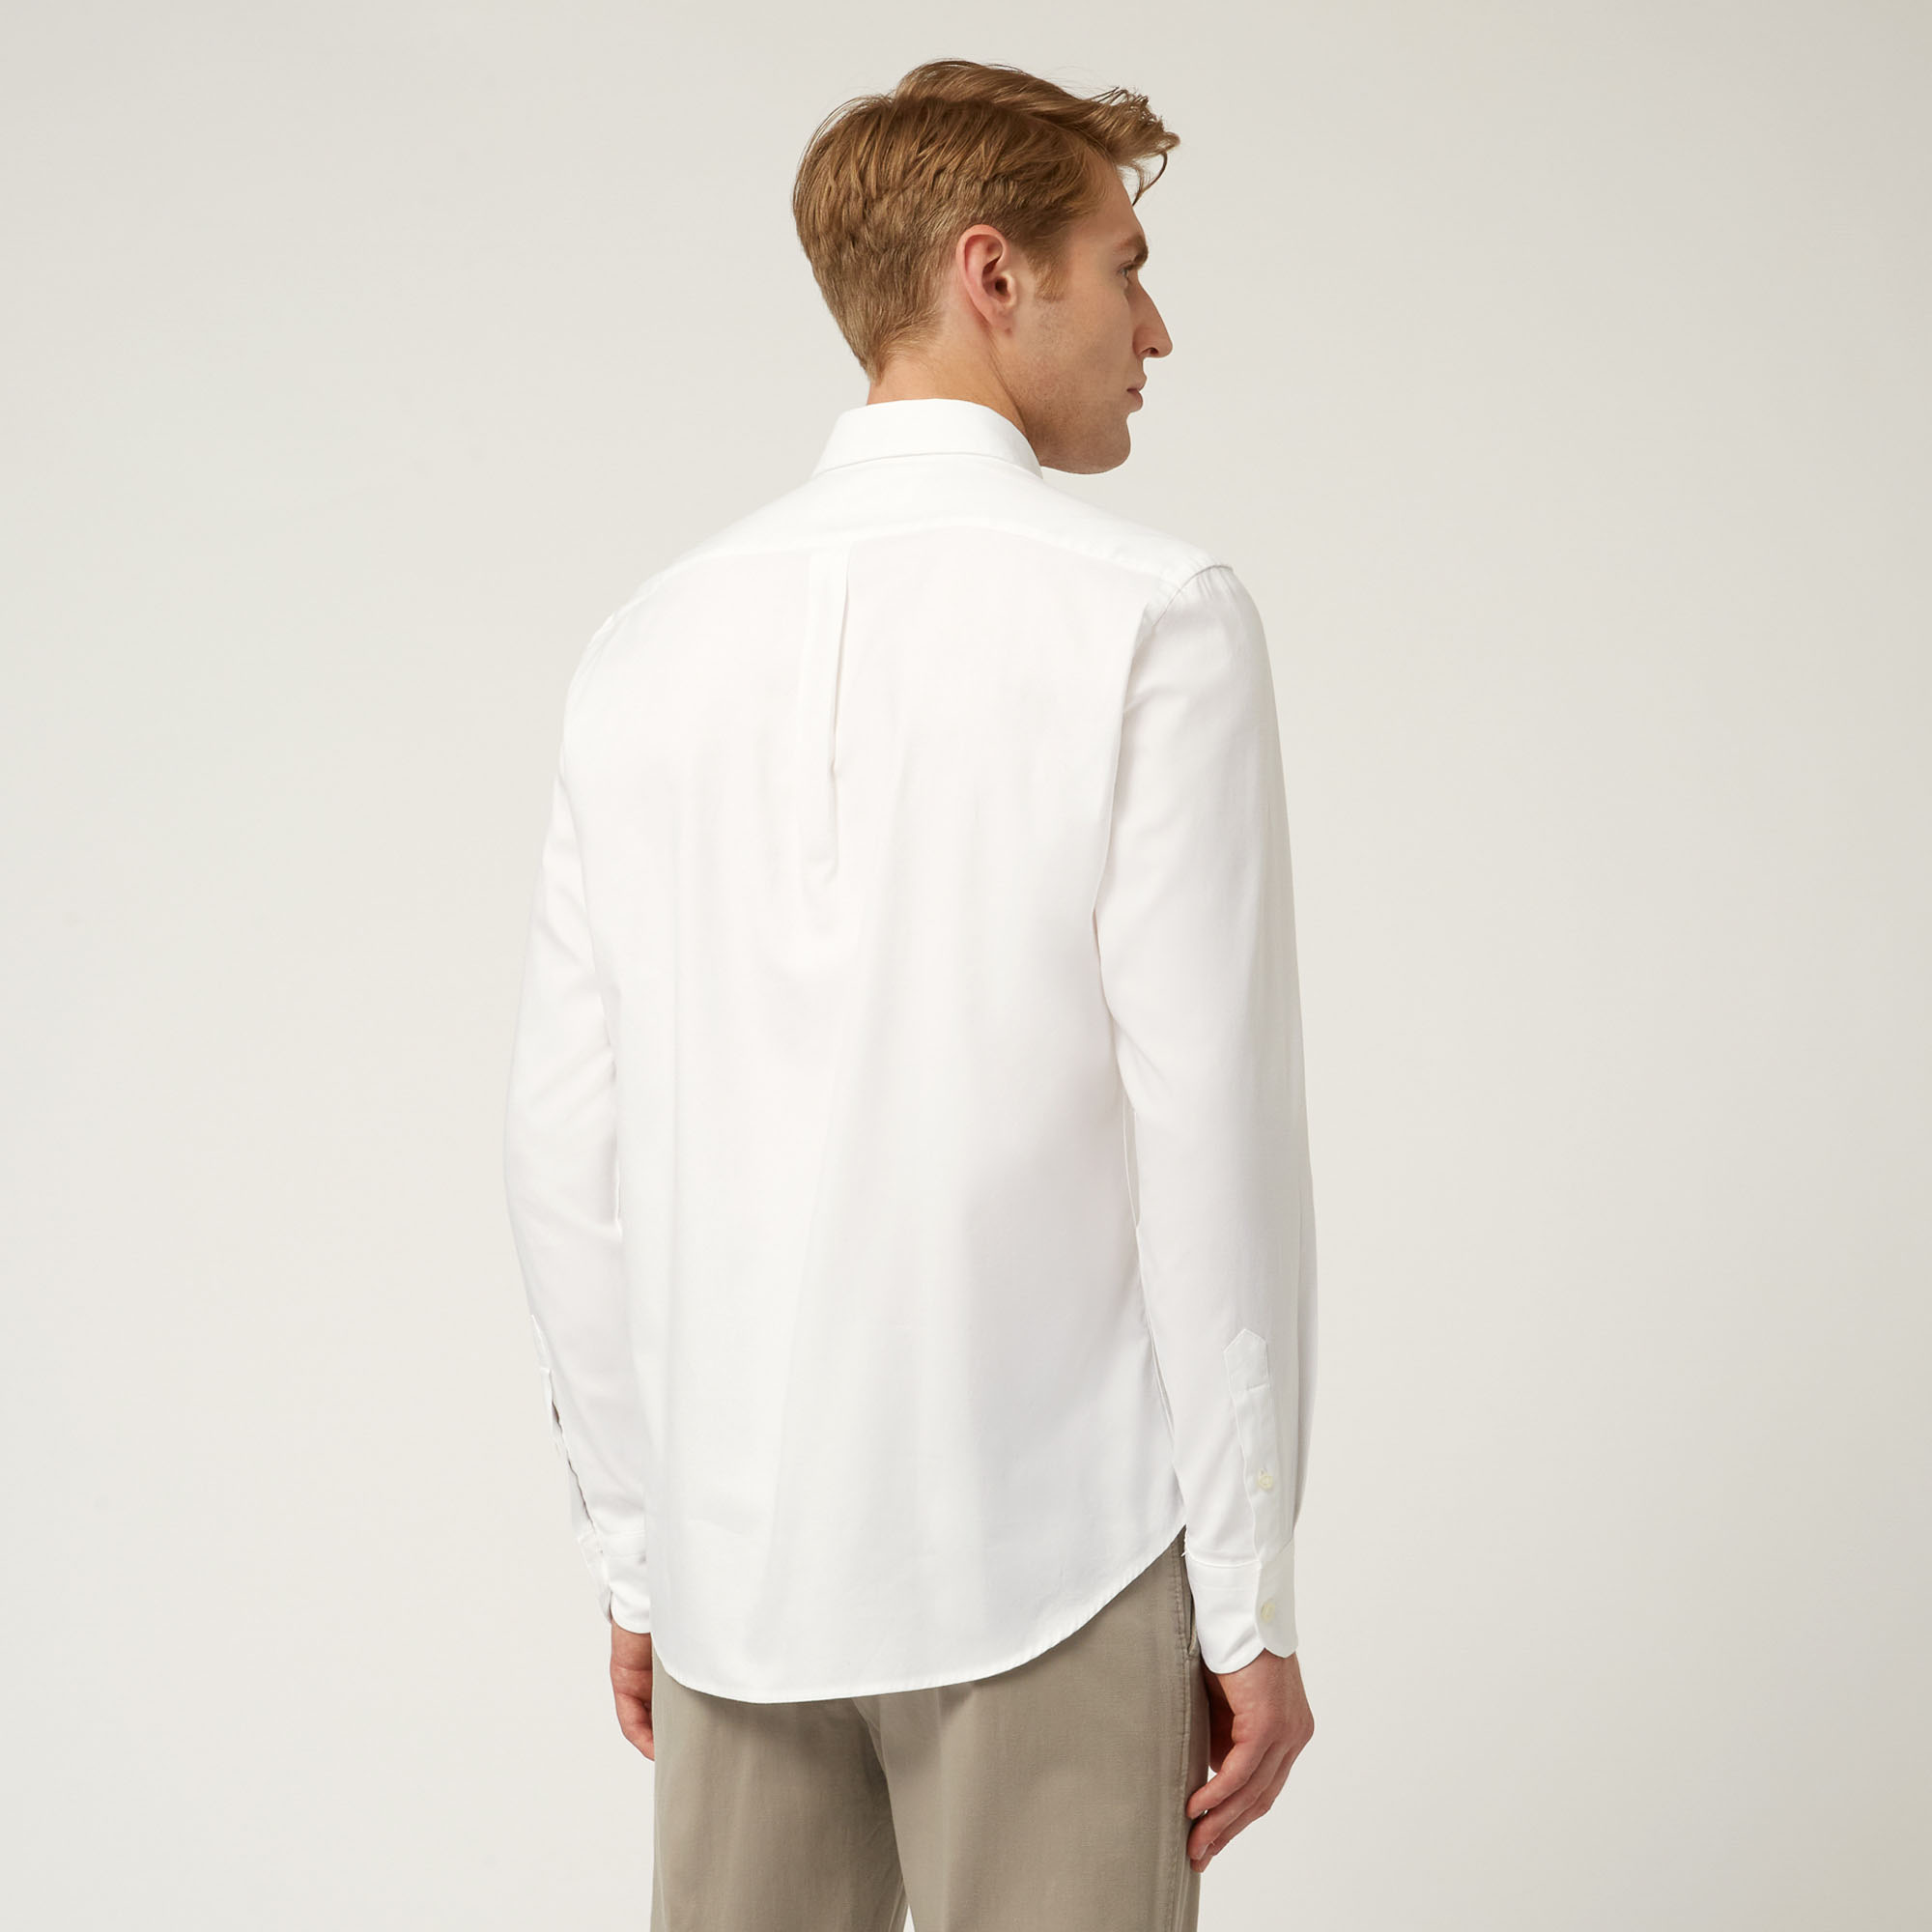 Essentials shirt in plain-coloured cotton